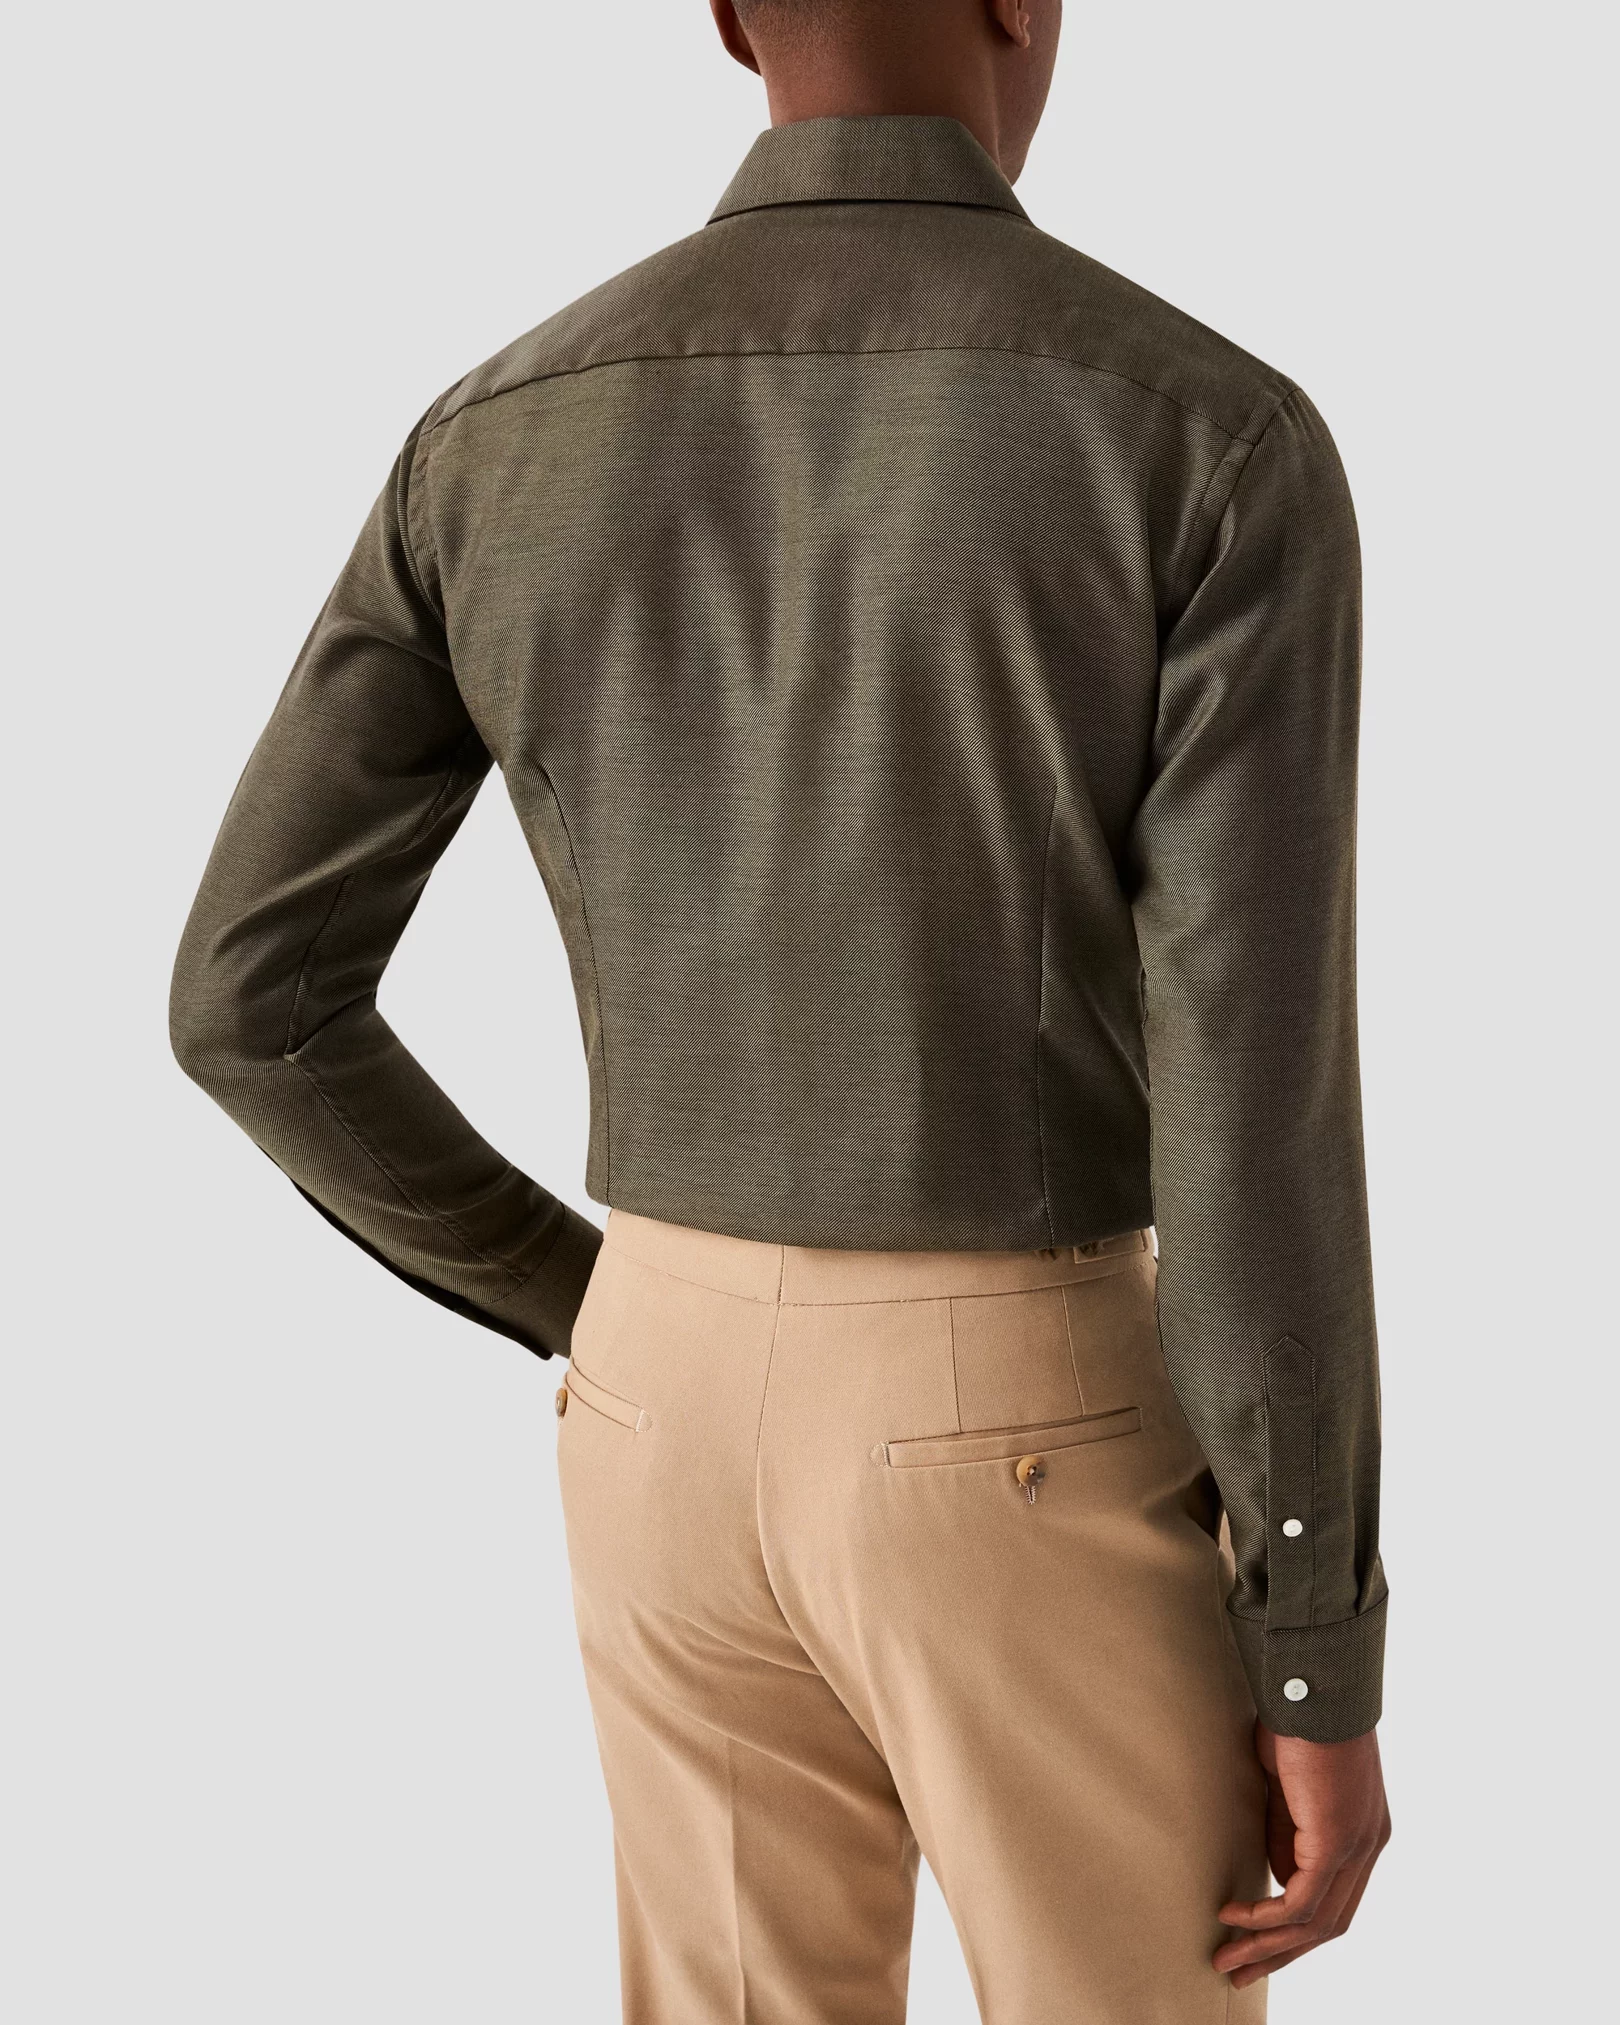 Eton - solid dark brown merino shirt